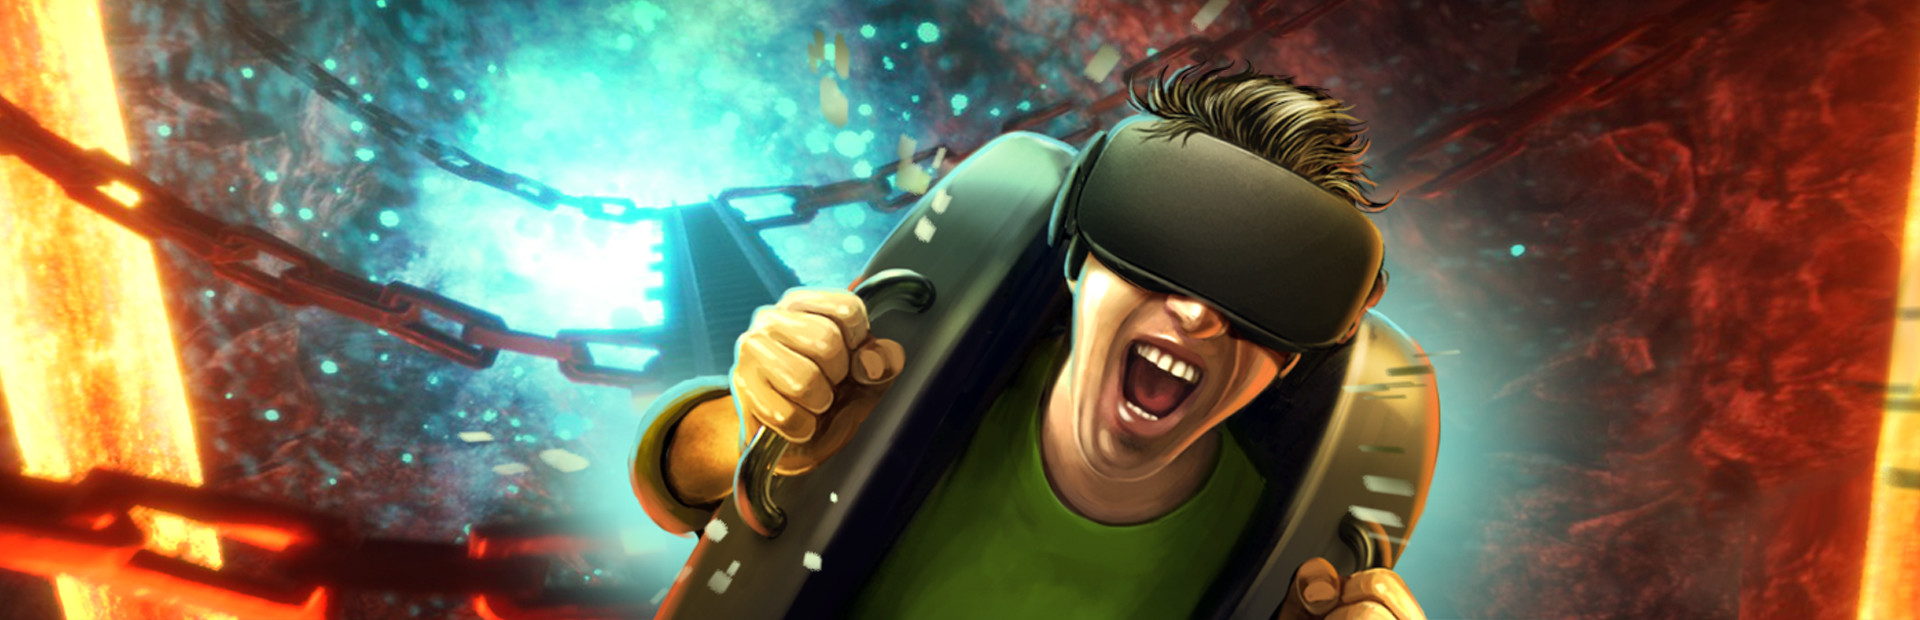 Dream Coaster VR Remastered cover image